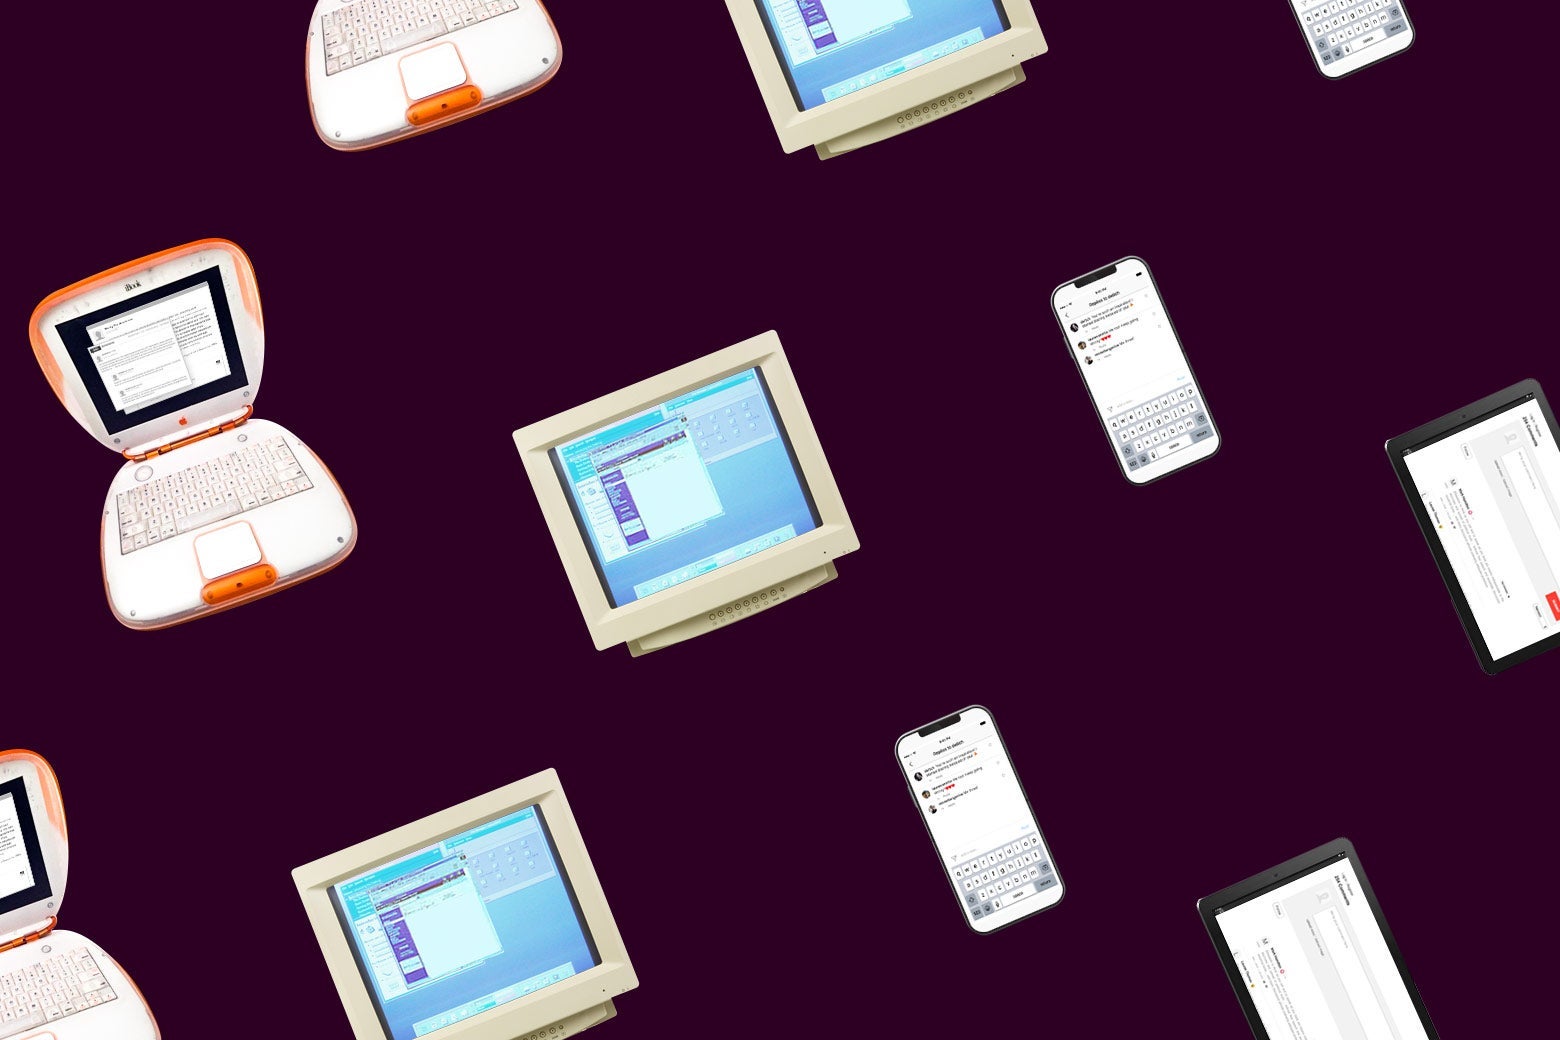 A pattern of laptops, desktop monitors, smartphones, and tablets.